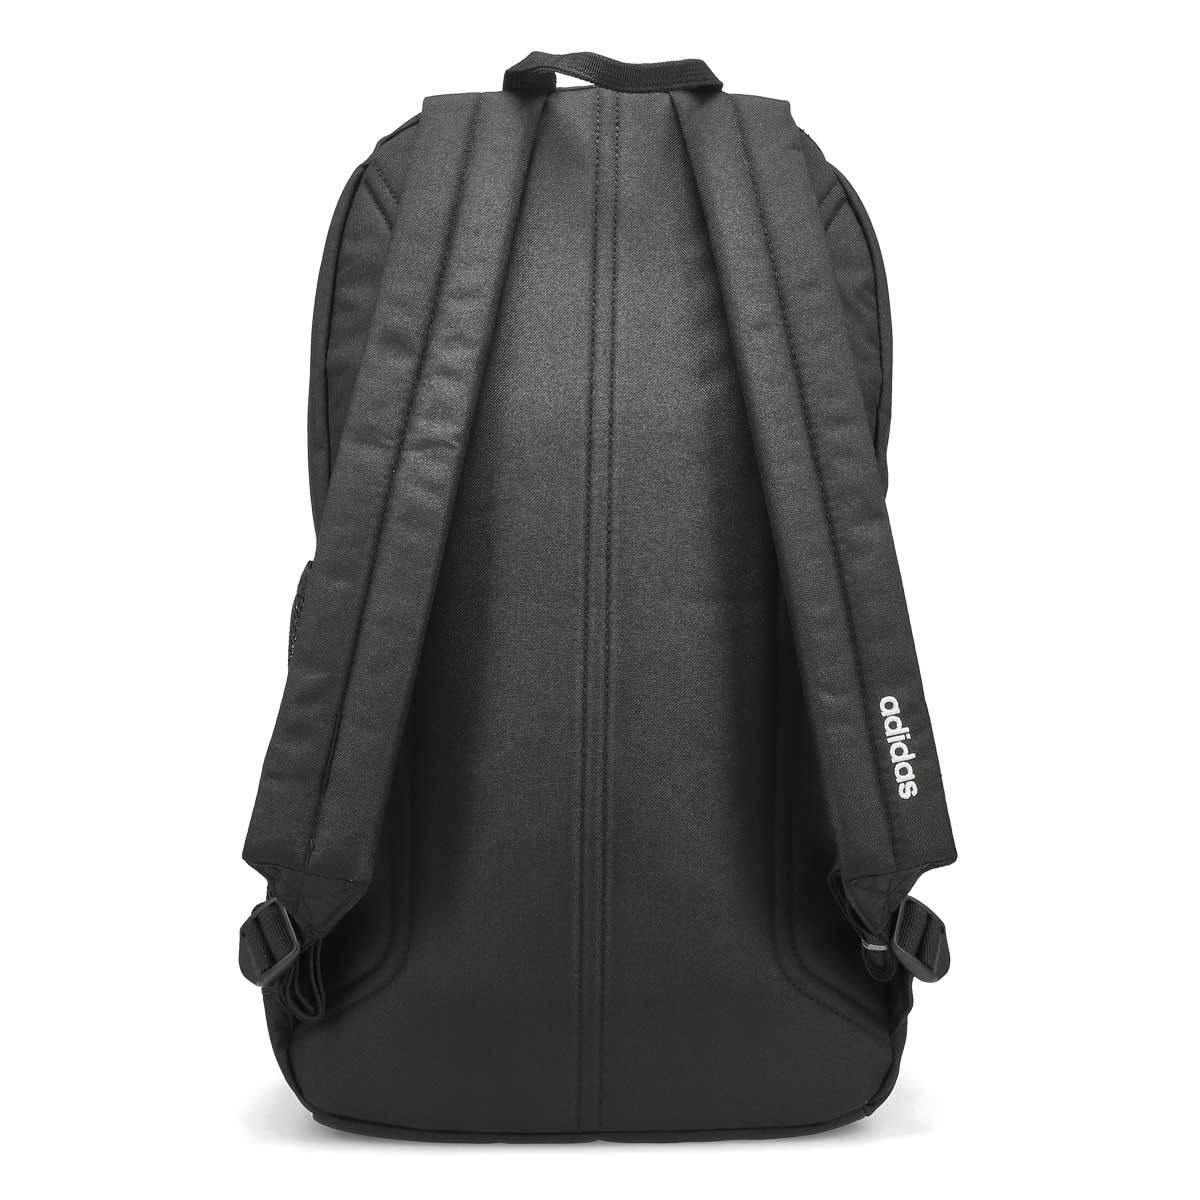 Adidas Classic 3S IV Backpack - Black